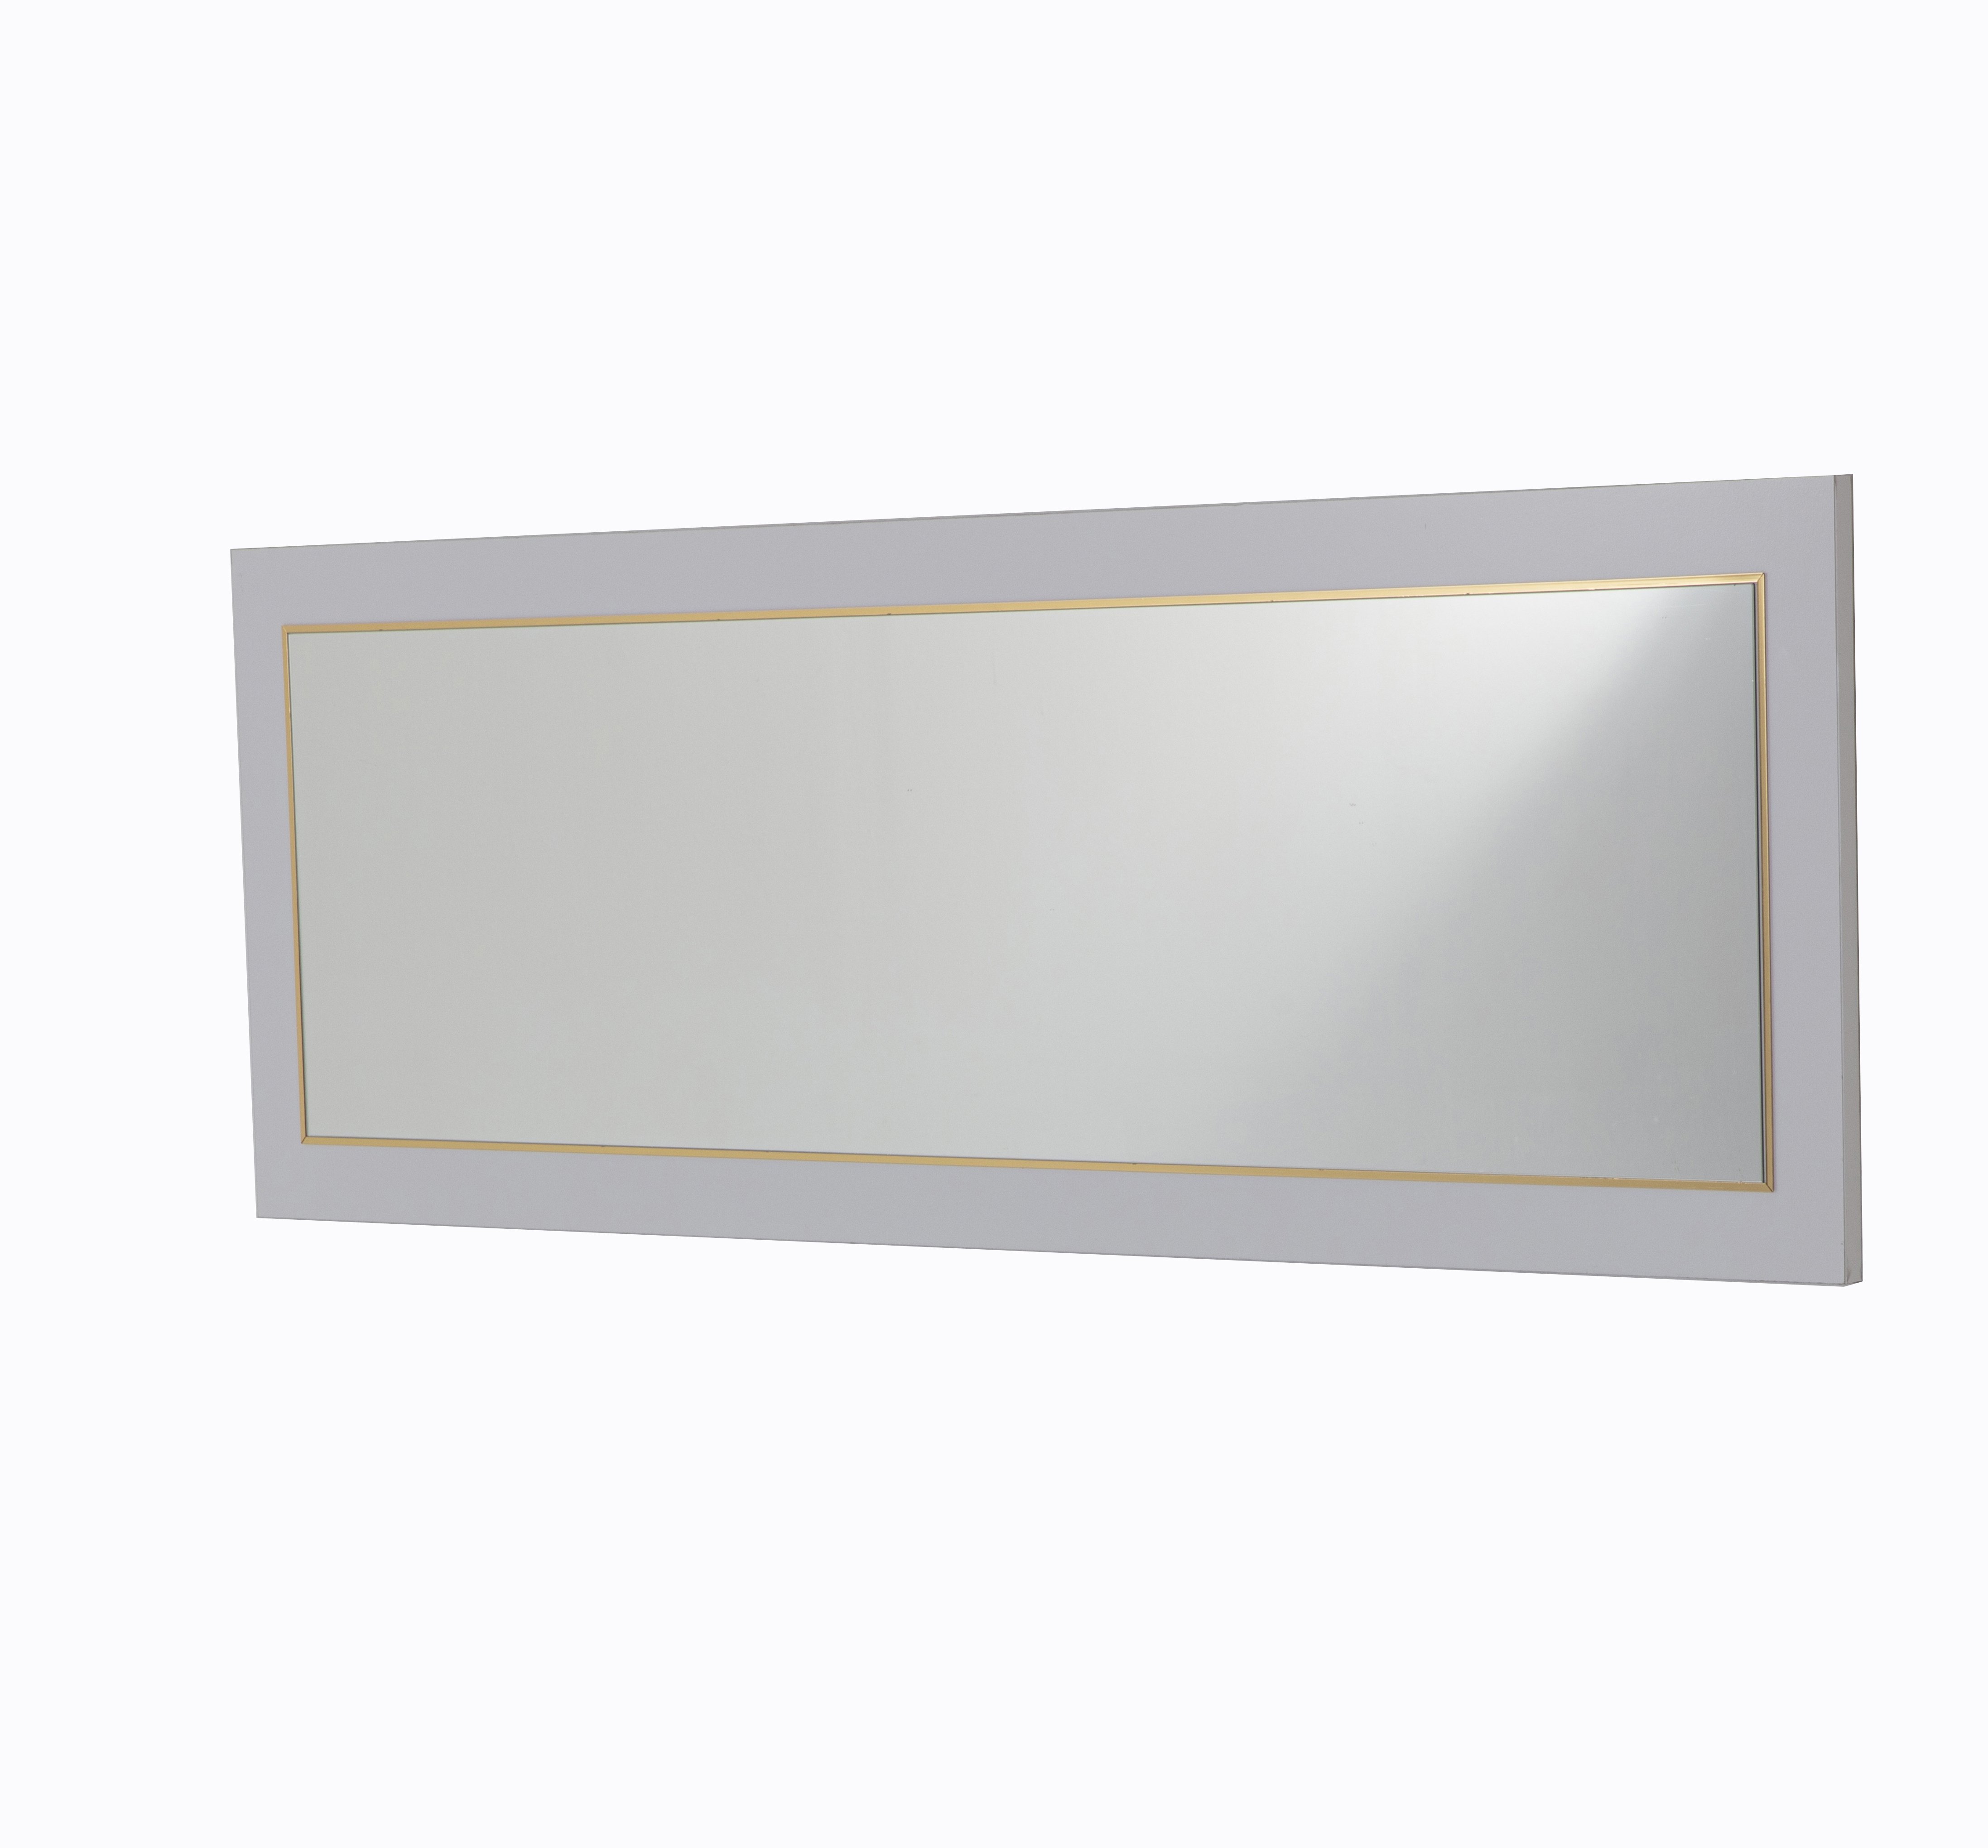 Зеркало для буфета Bellona Legenda цвет: белый (LEGN-B-11) остаткиLEGN-B-11